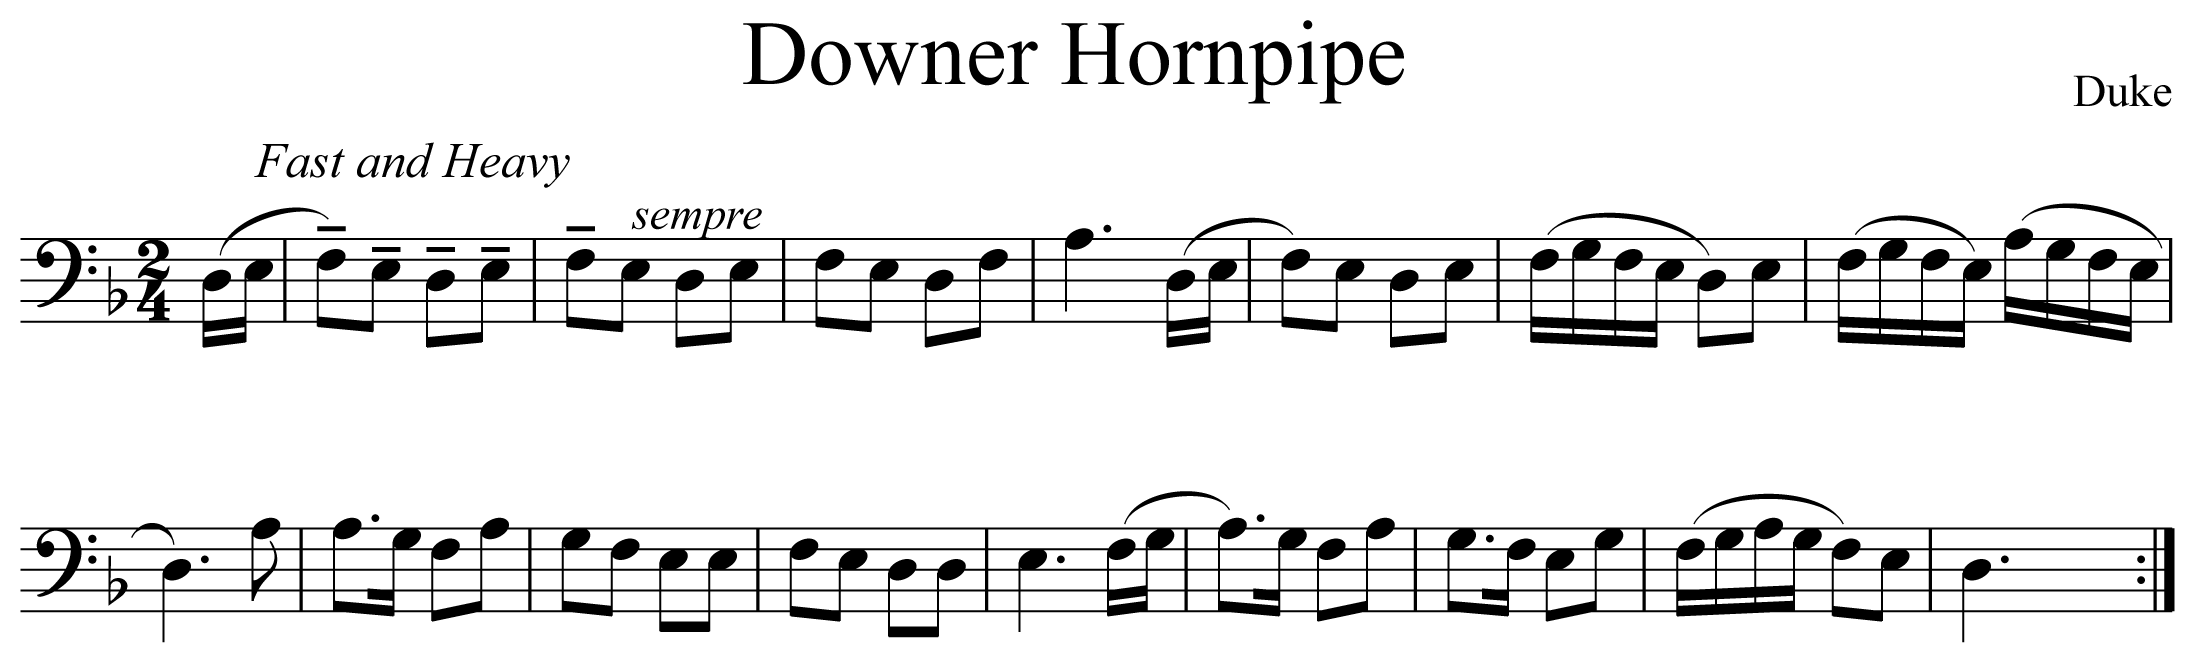 Downer Hornpipe Notation Trombone